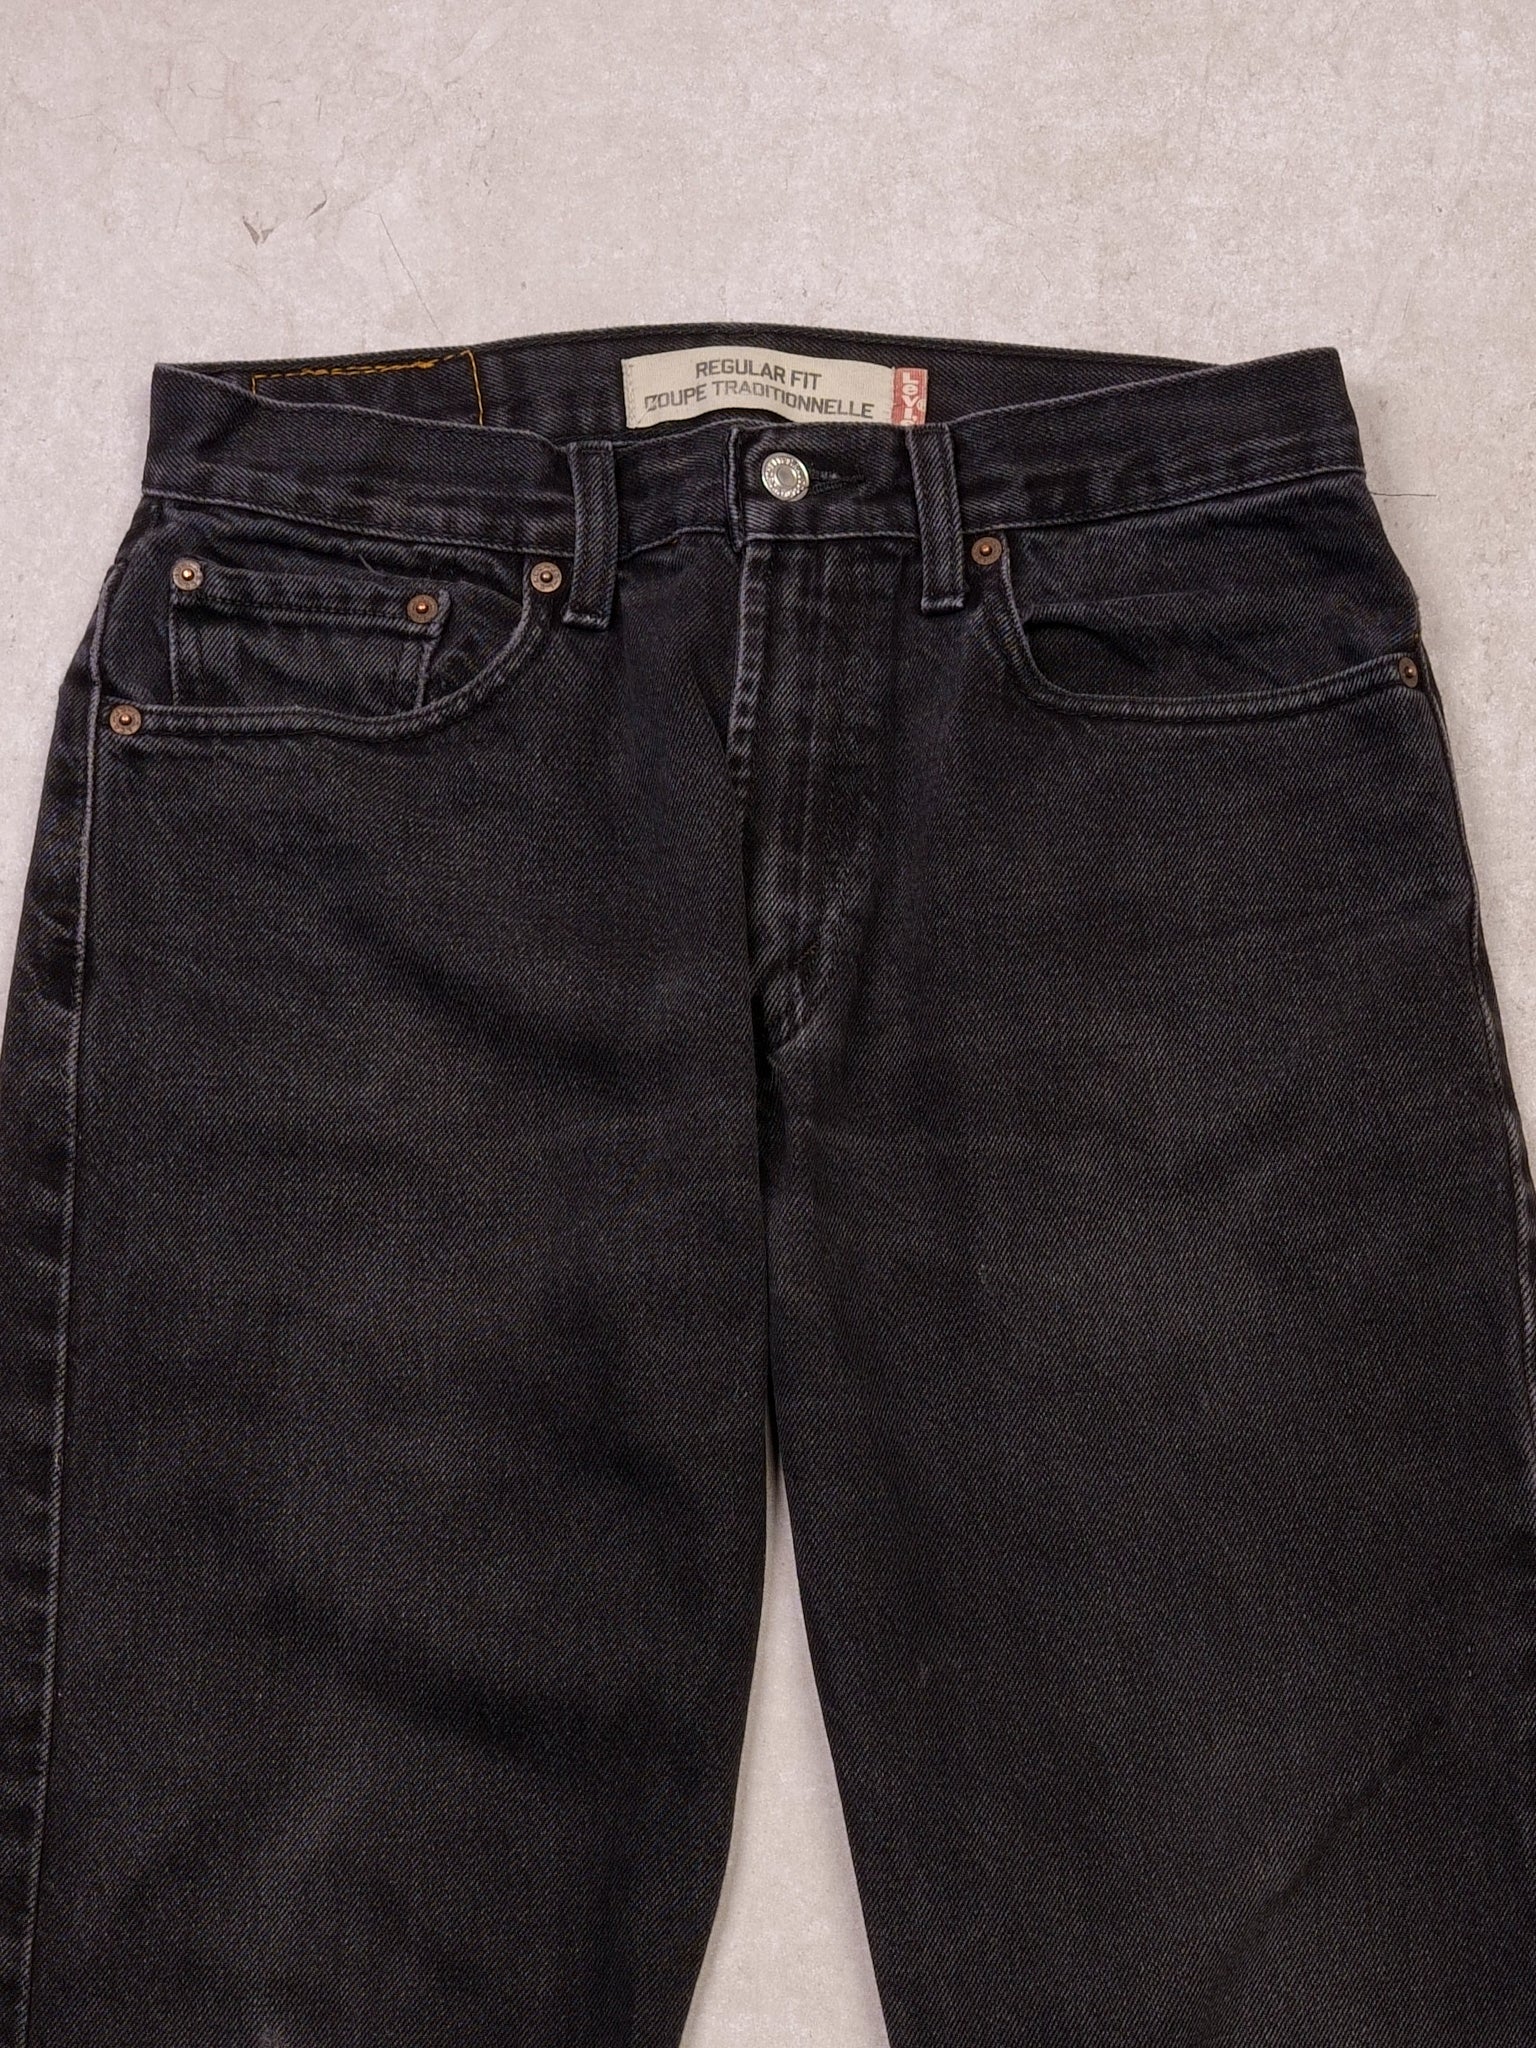 Vintage 90s Washed Black Levi's 505 Original Fit Denim Jeans (30x31)